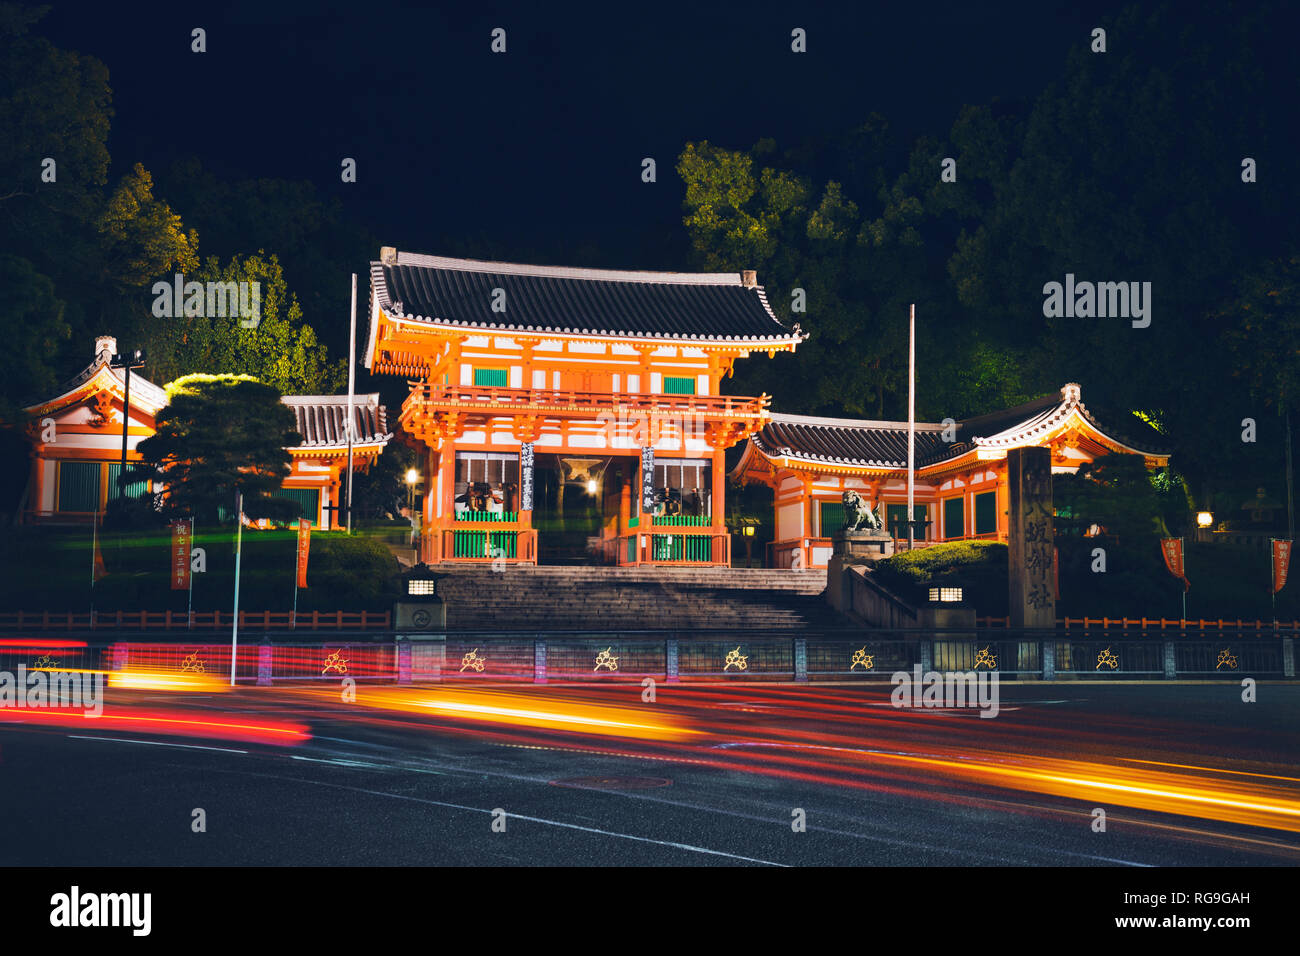 Main gate of the Yasaka shrine at night, Kyoto. Japan. Stock Photo